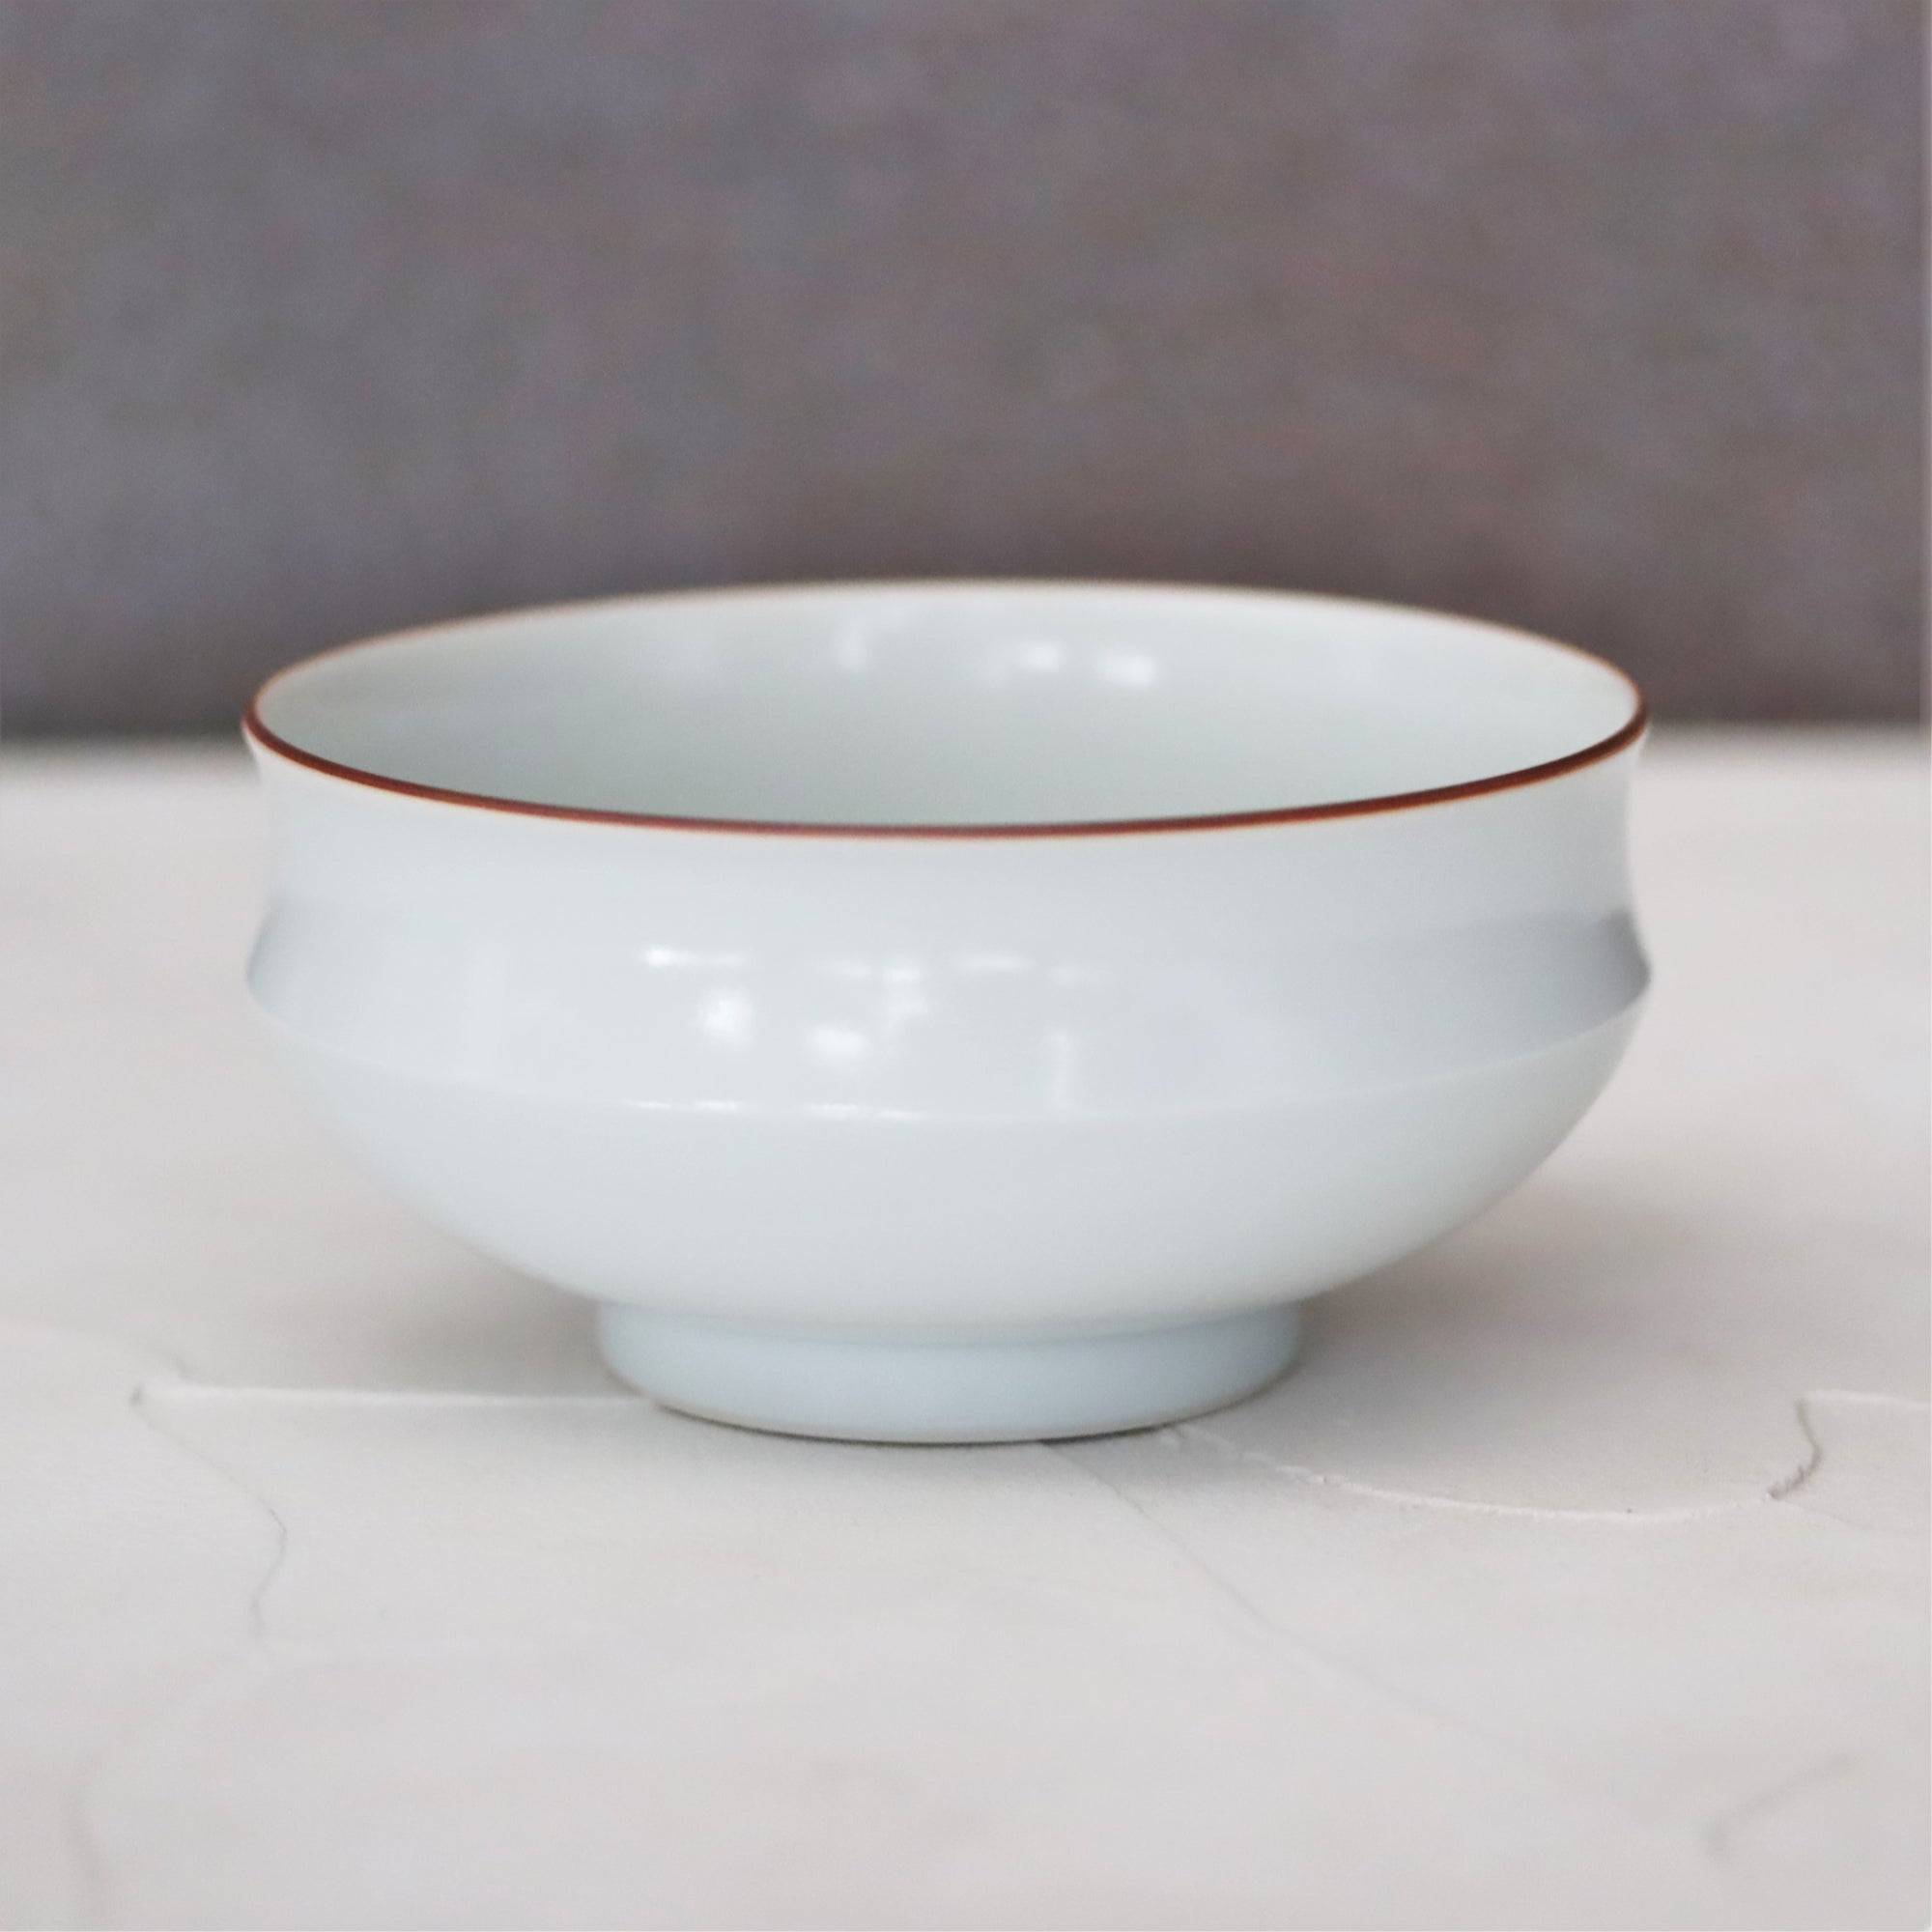 【Masamitsu Kawai】white porcelain small bowl with scarlet edge